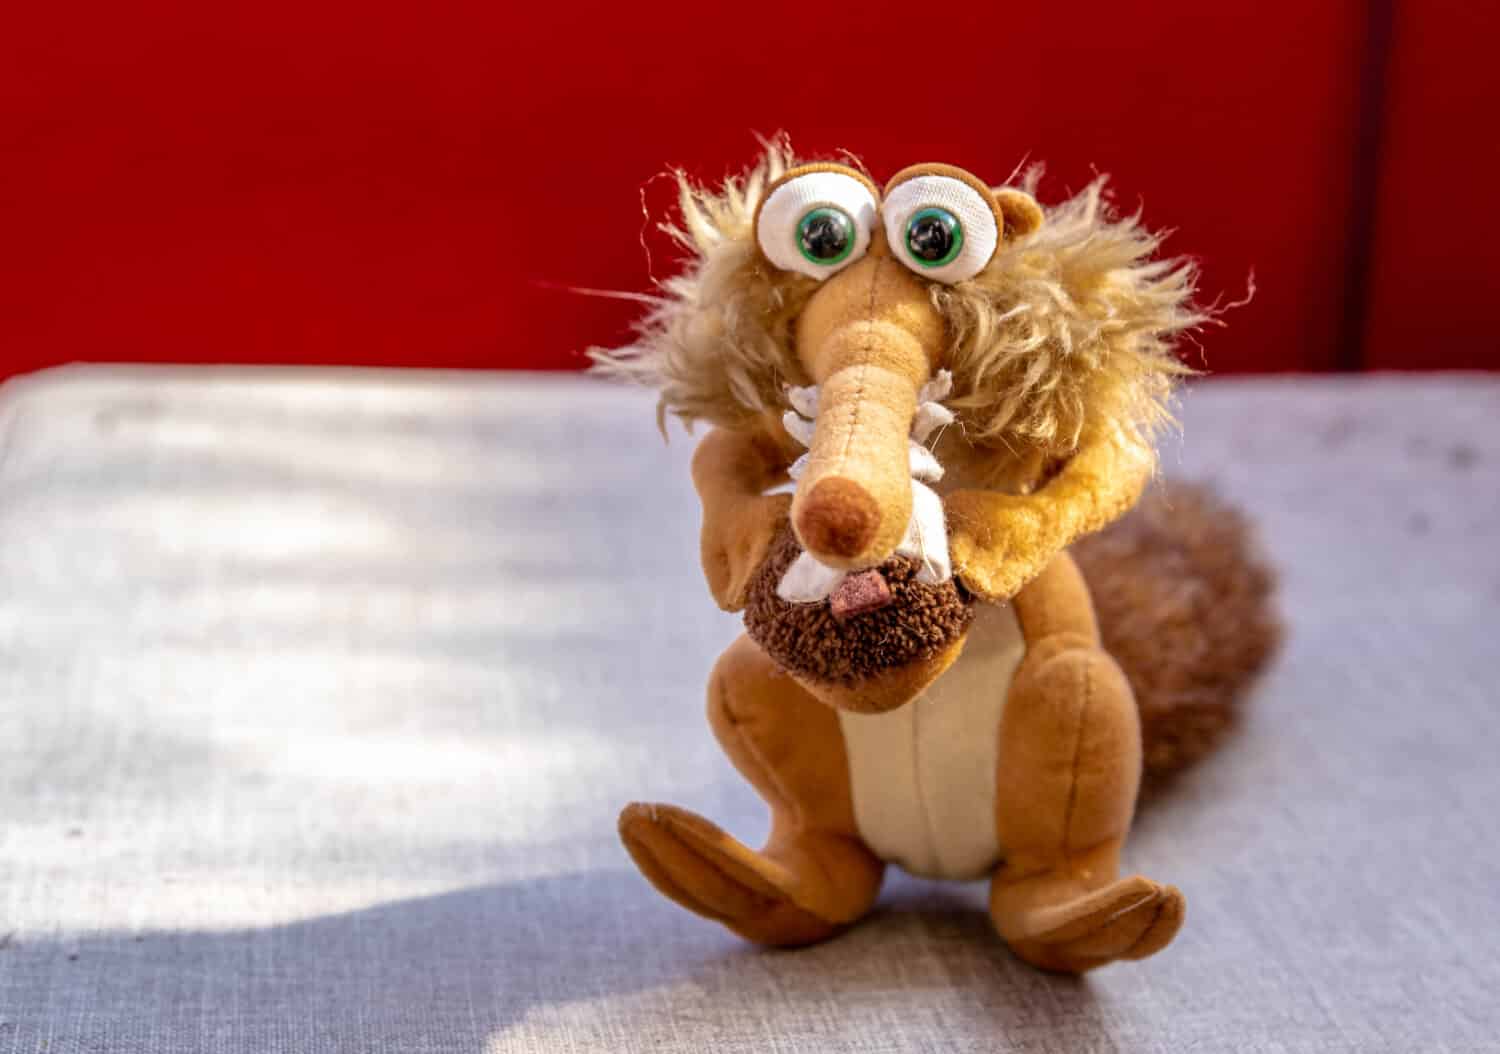 Squirrel plush toy from Cartoon 